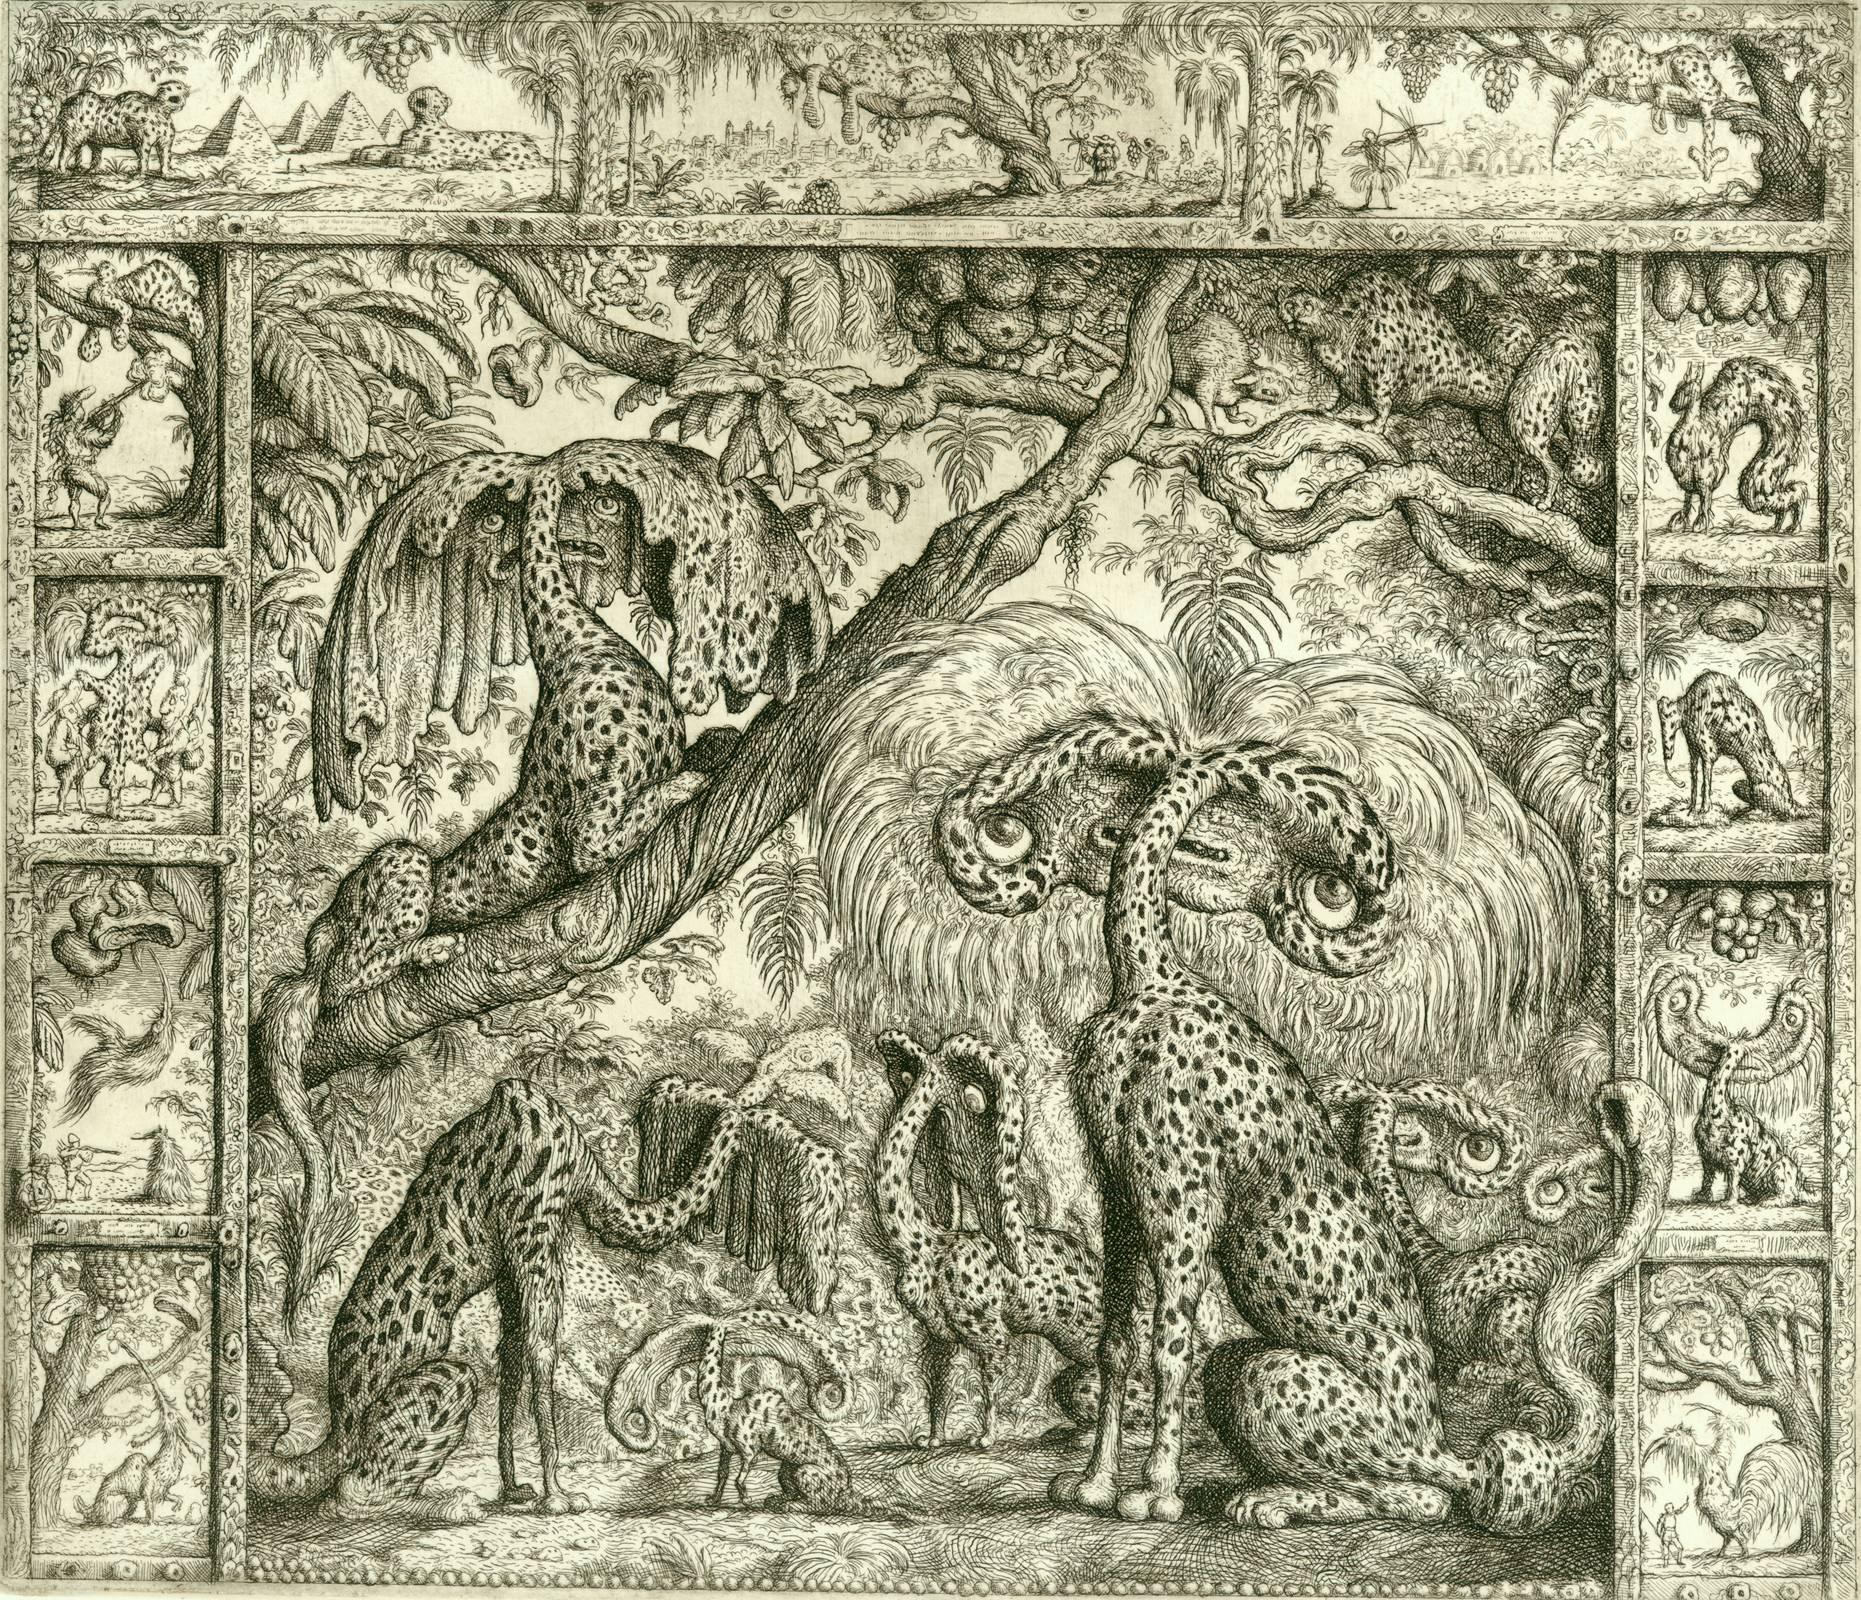 Peter Klúcik Animal Print - Pzrdrnv z pralesa (Postcard from the Rainforest)